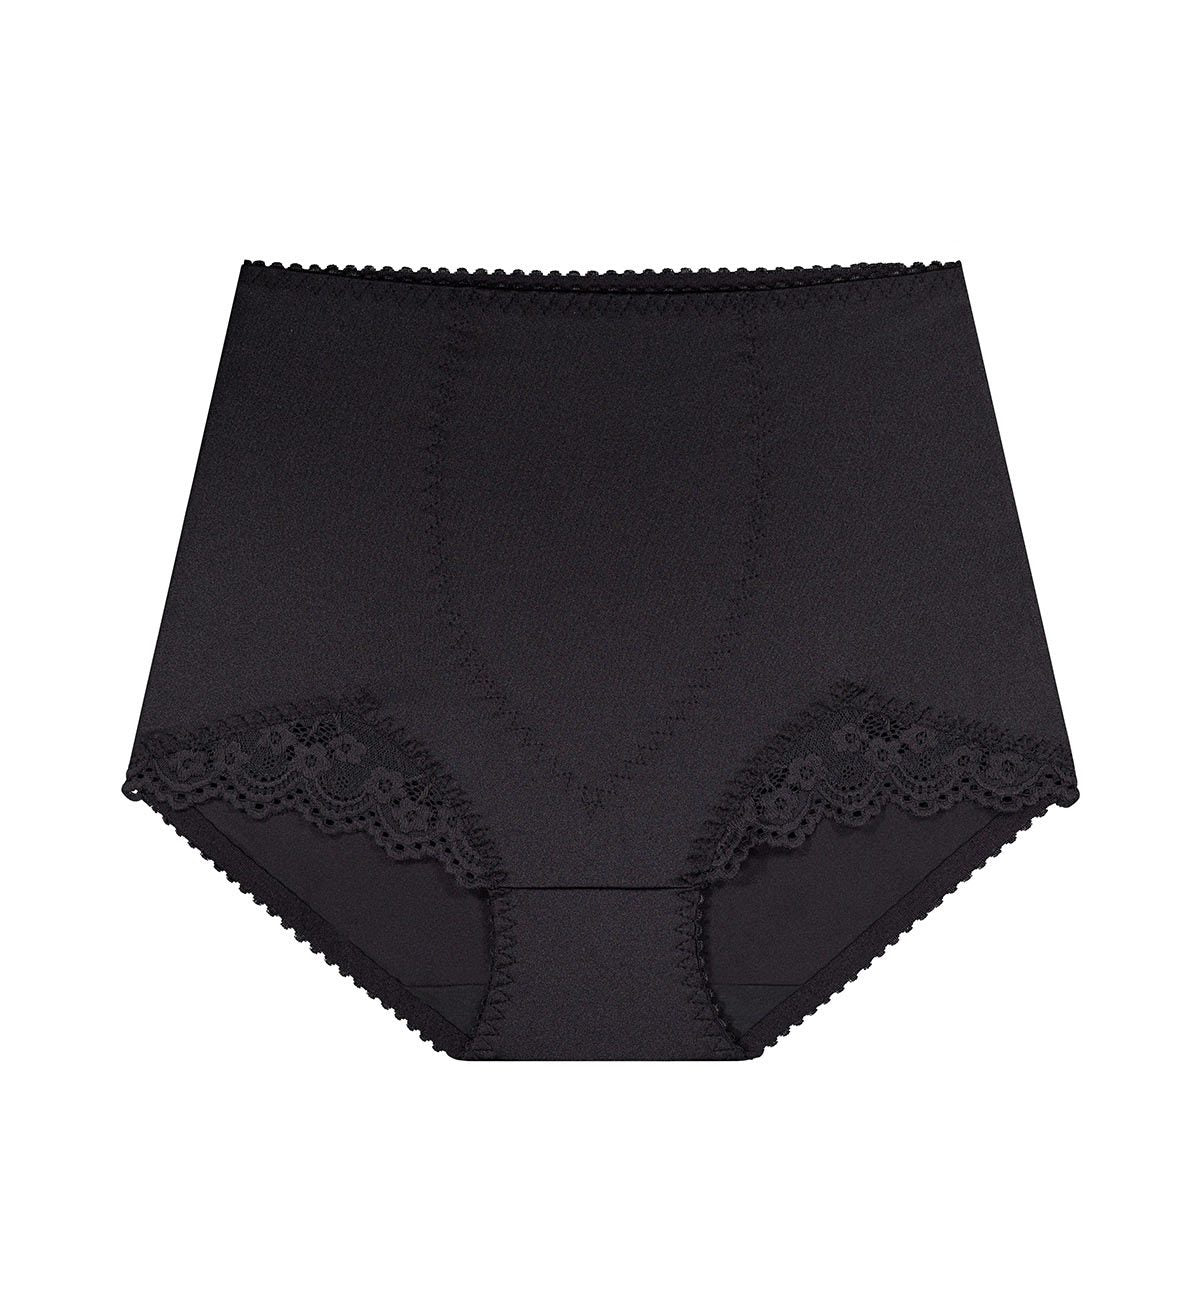 Buy Something Else Tum-E-Lace Panty in Black